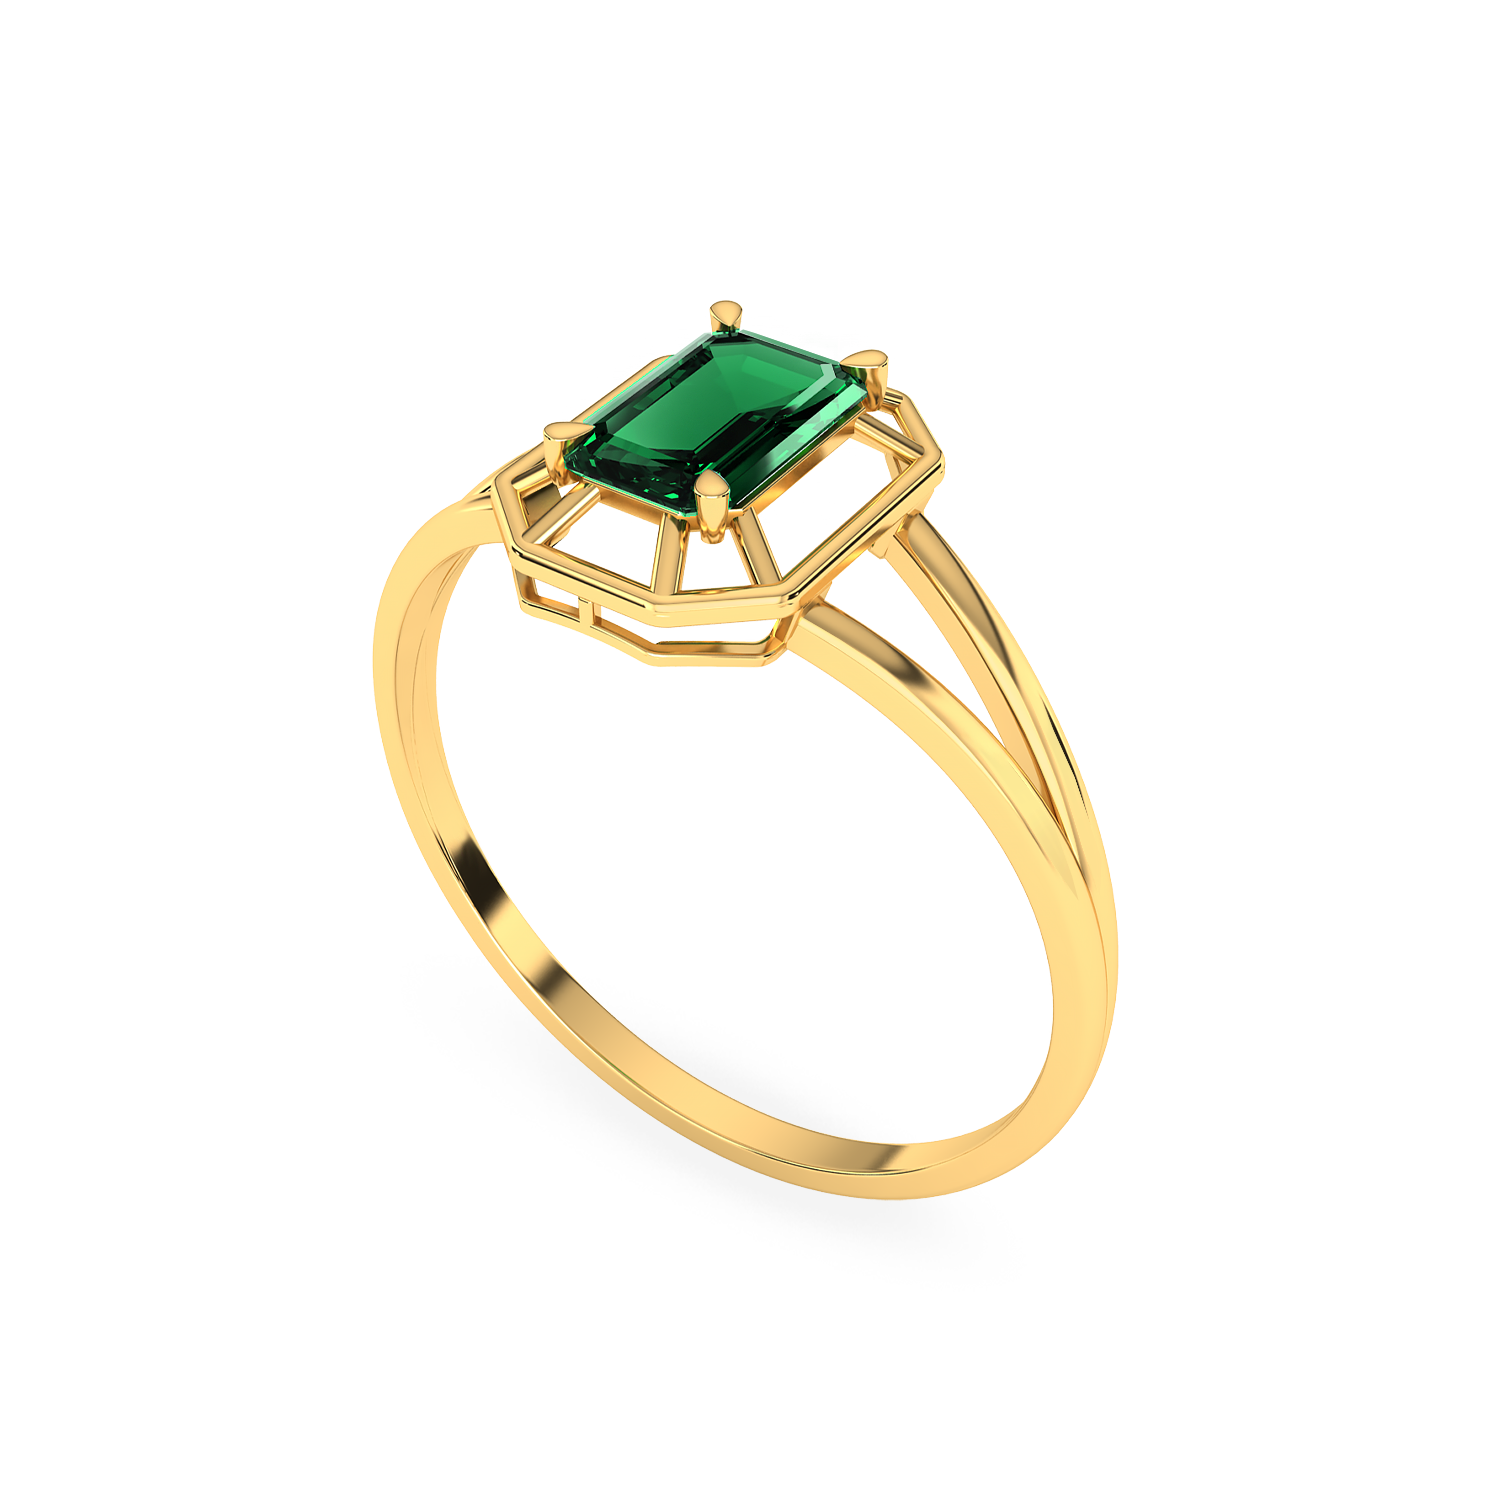 Bespoke emerald ring | Sapphire ring | Ruby ring | Glasgow jeweller